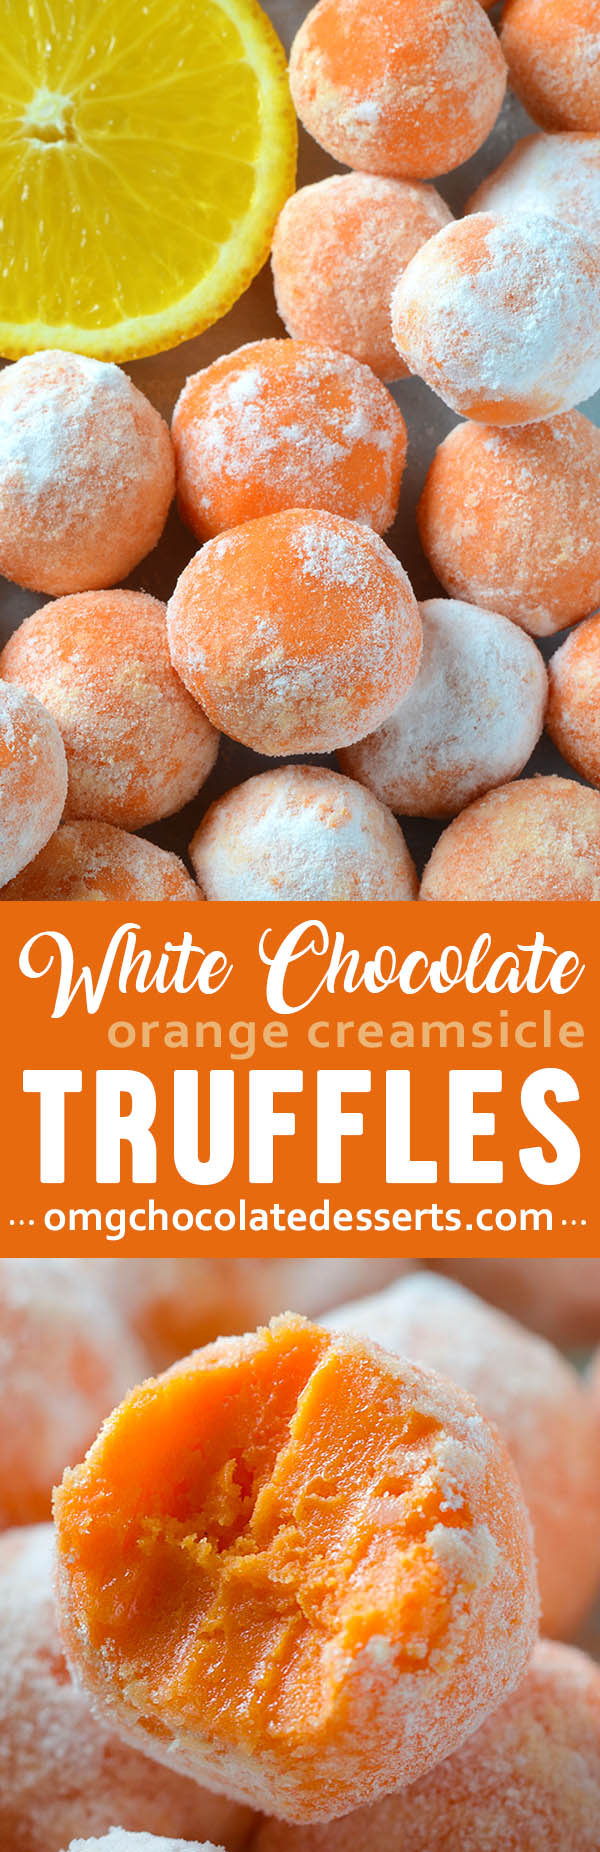 White Chocolate Orange Creamsicle Truffles | A Summer Dessert Recipe